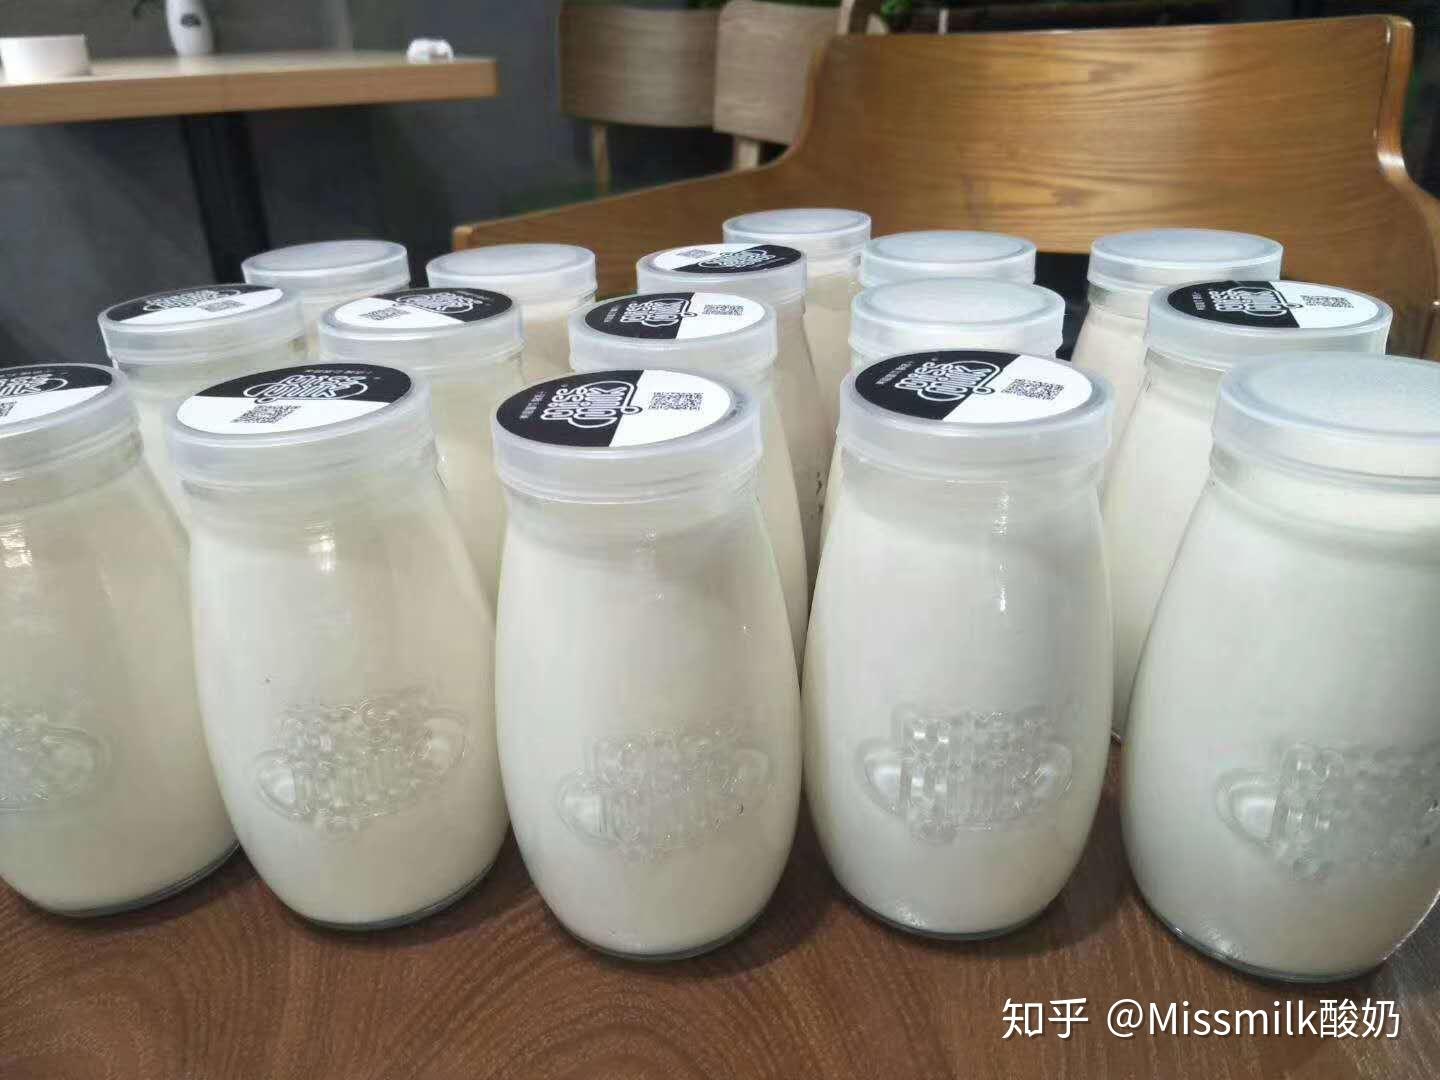 anemon3新疆手工酸奶包1000g整箱传统点心网红早餐椰蓉夹心小面包- 粉丝福利购